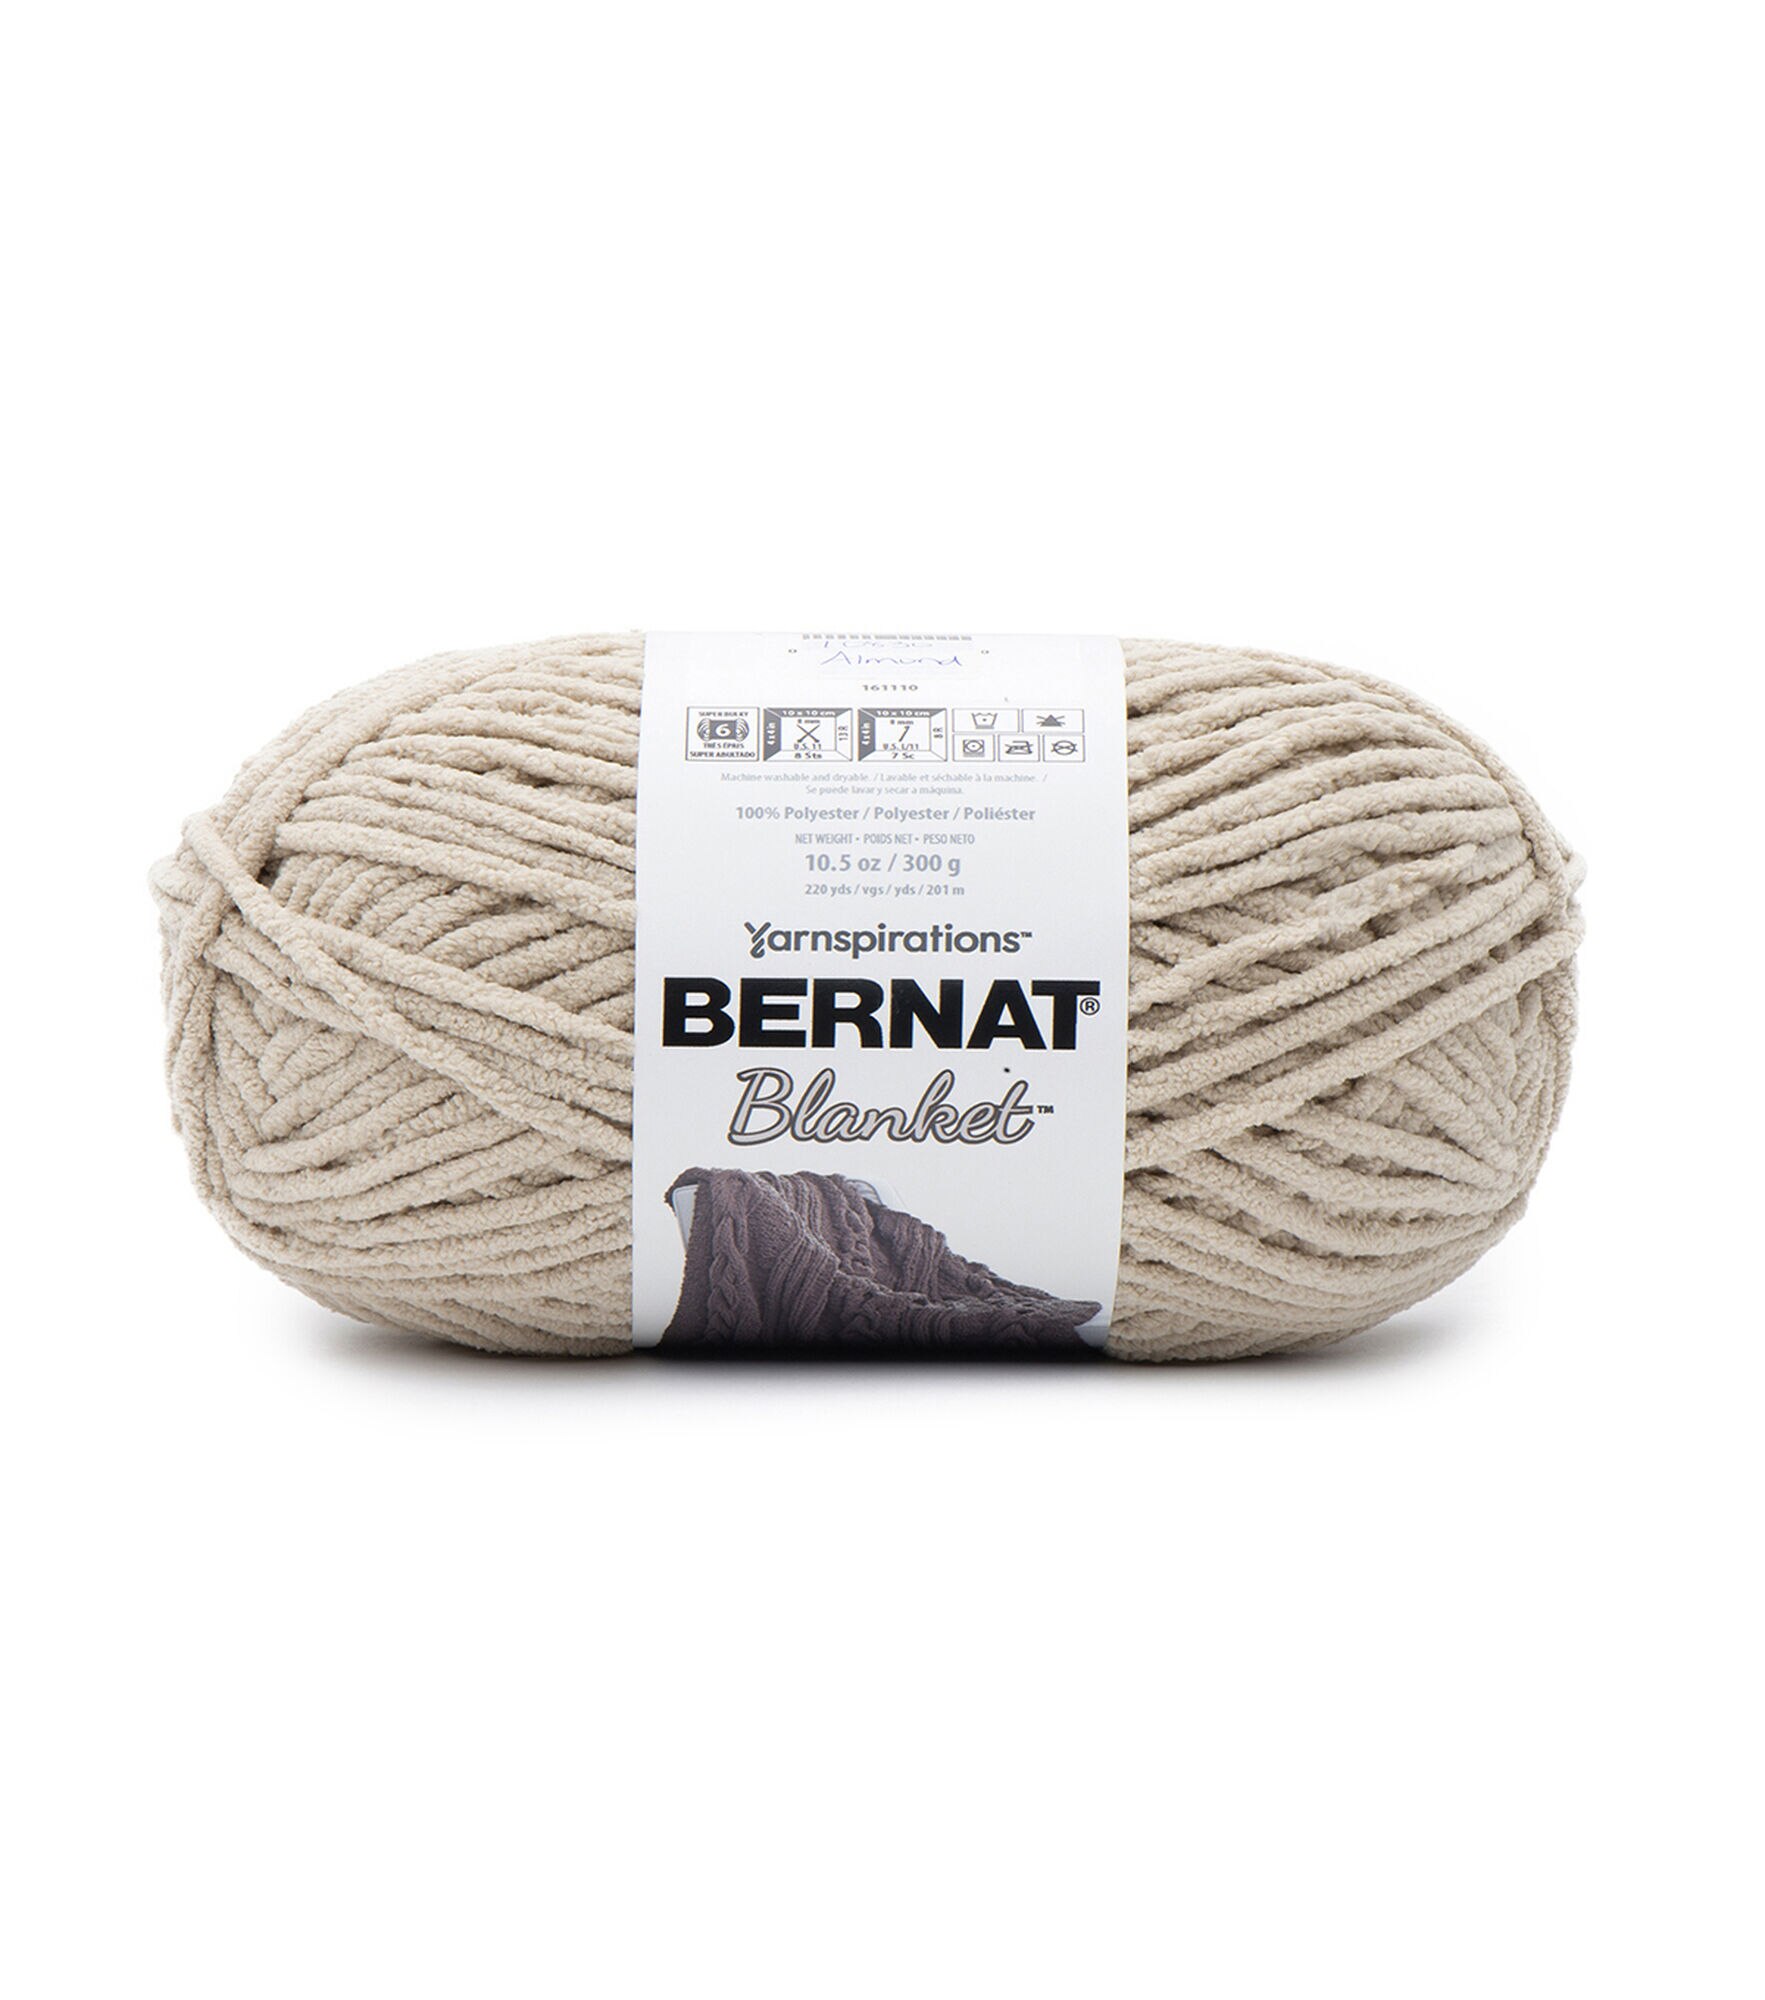 Bernat Blanket Brights Big Ball Yarn-Blue Flash